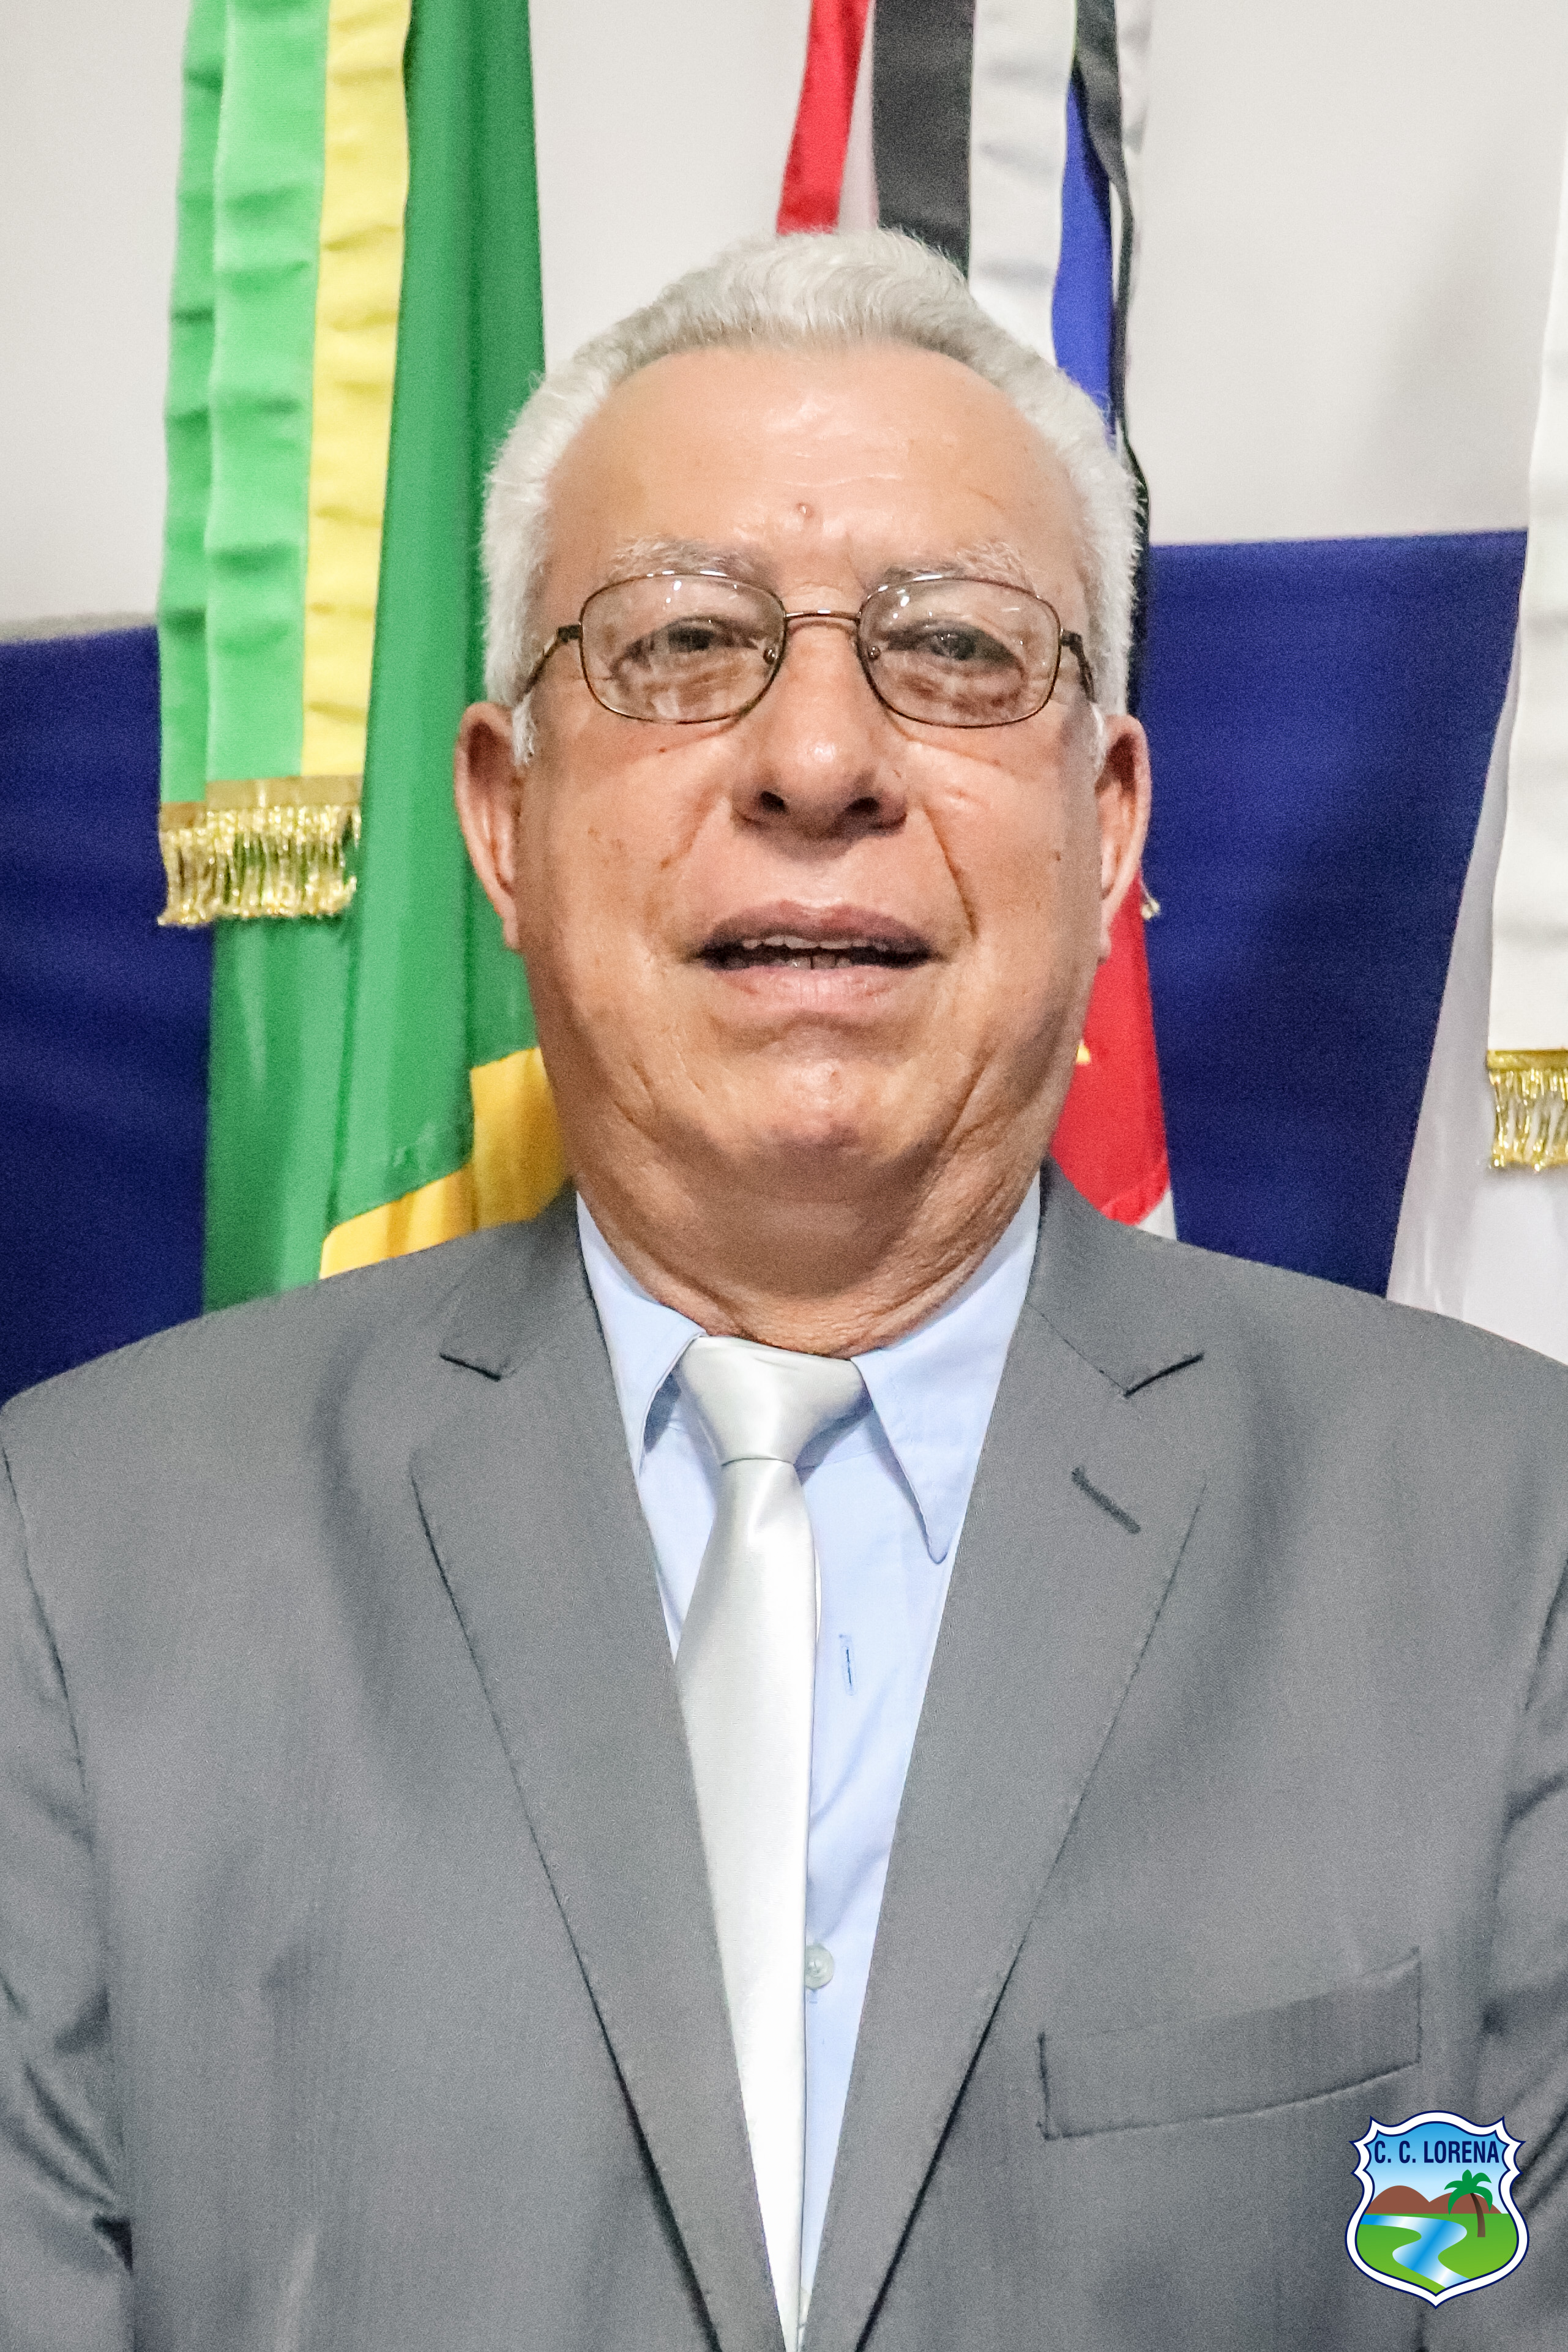 Luis Carlos da Silva